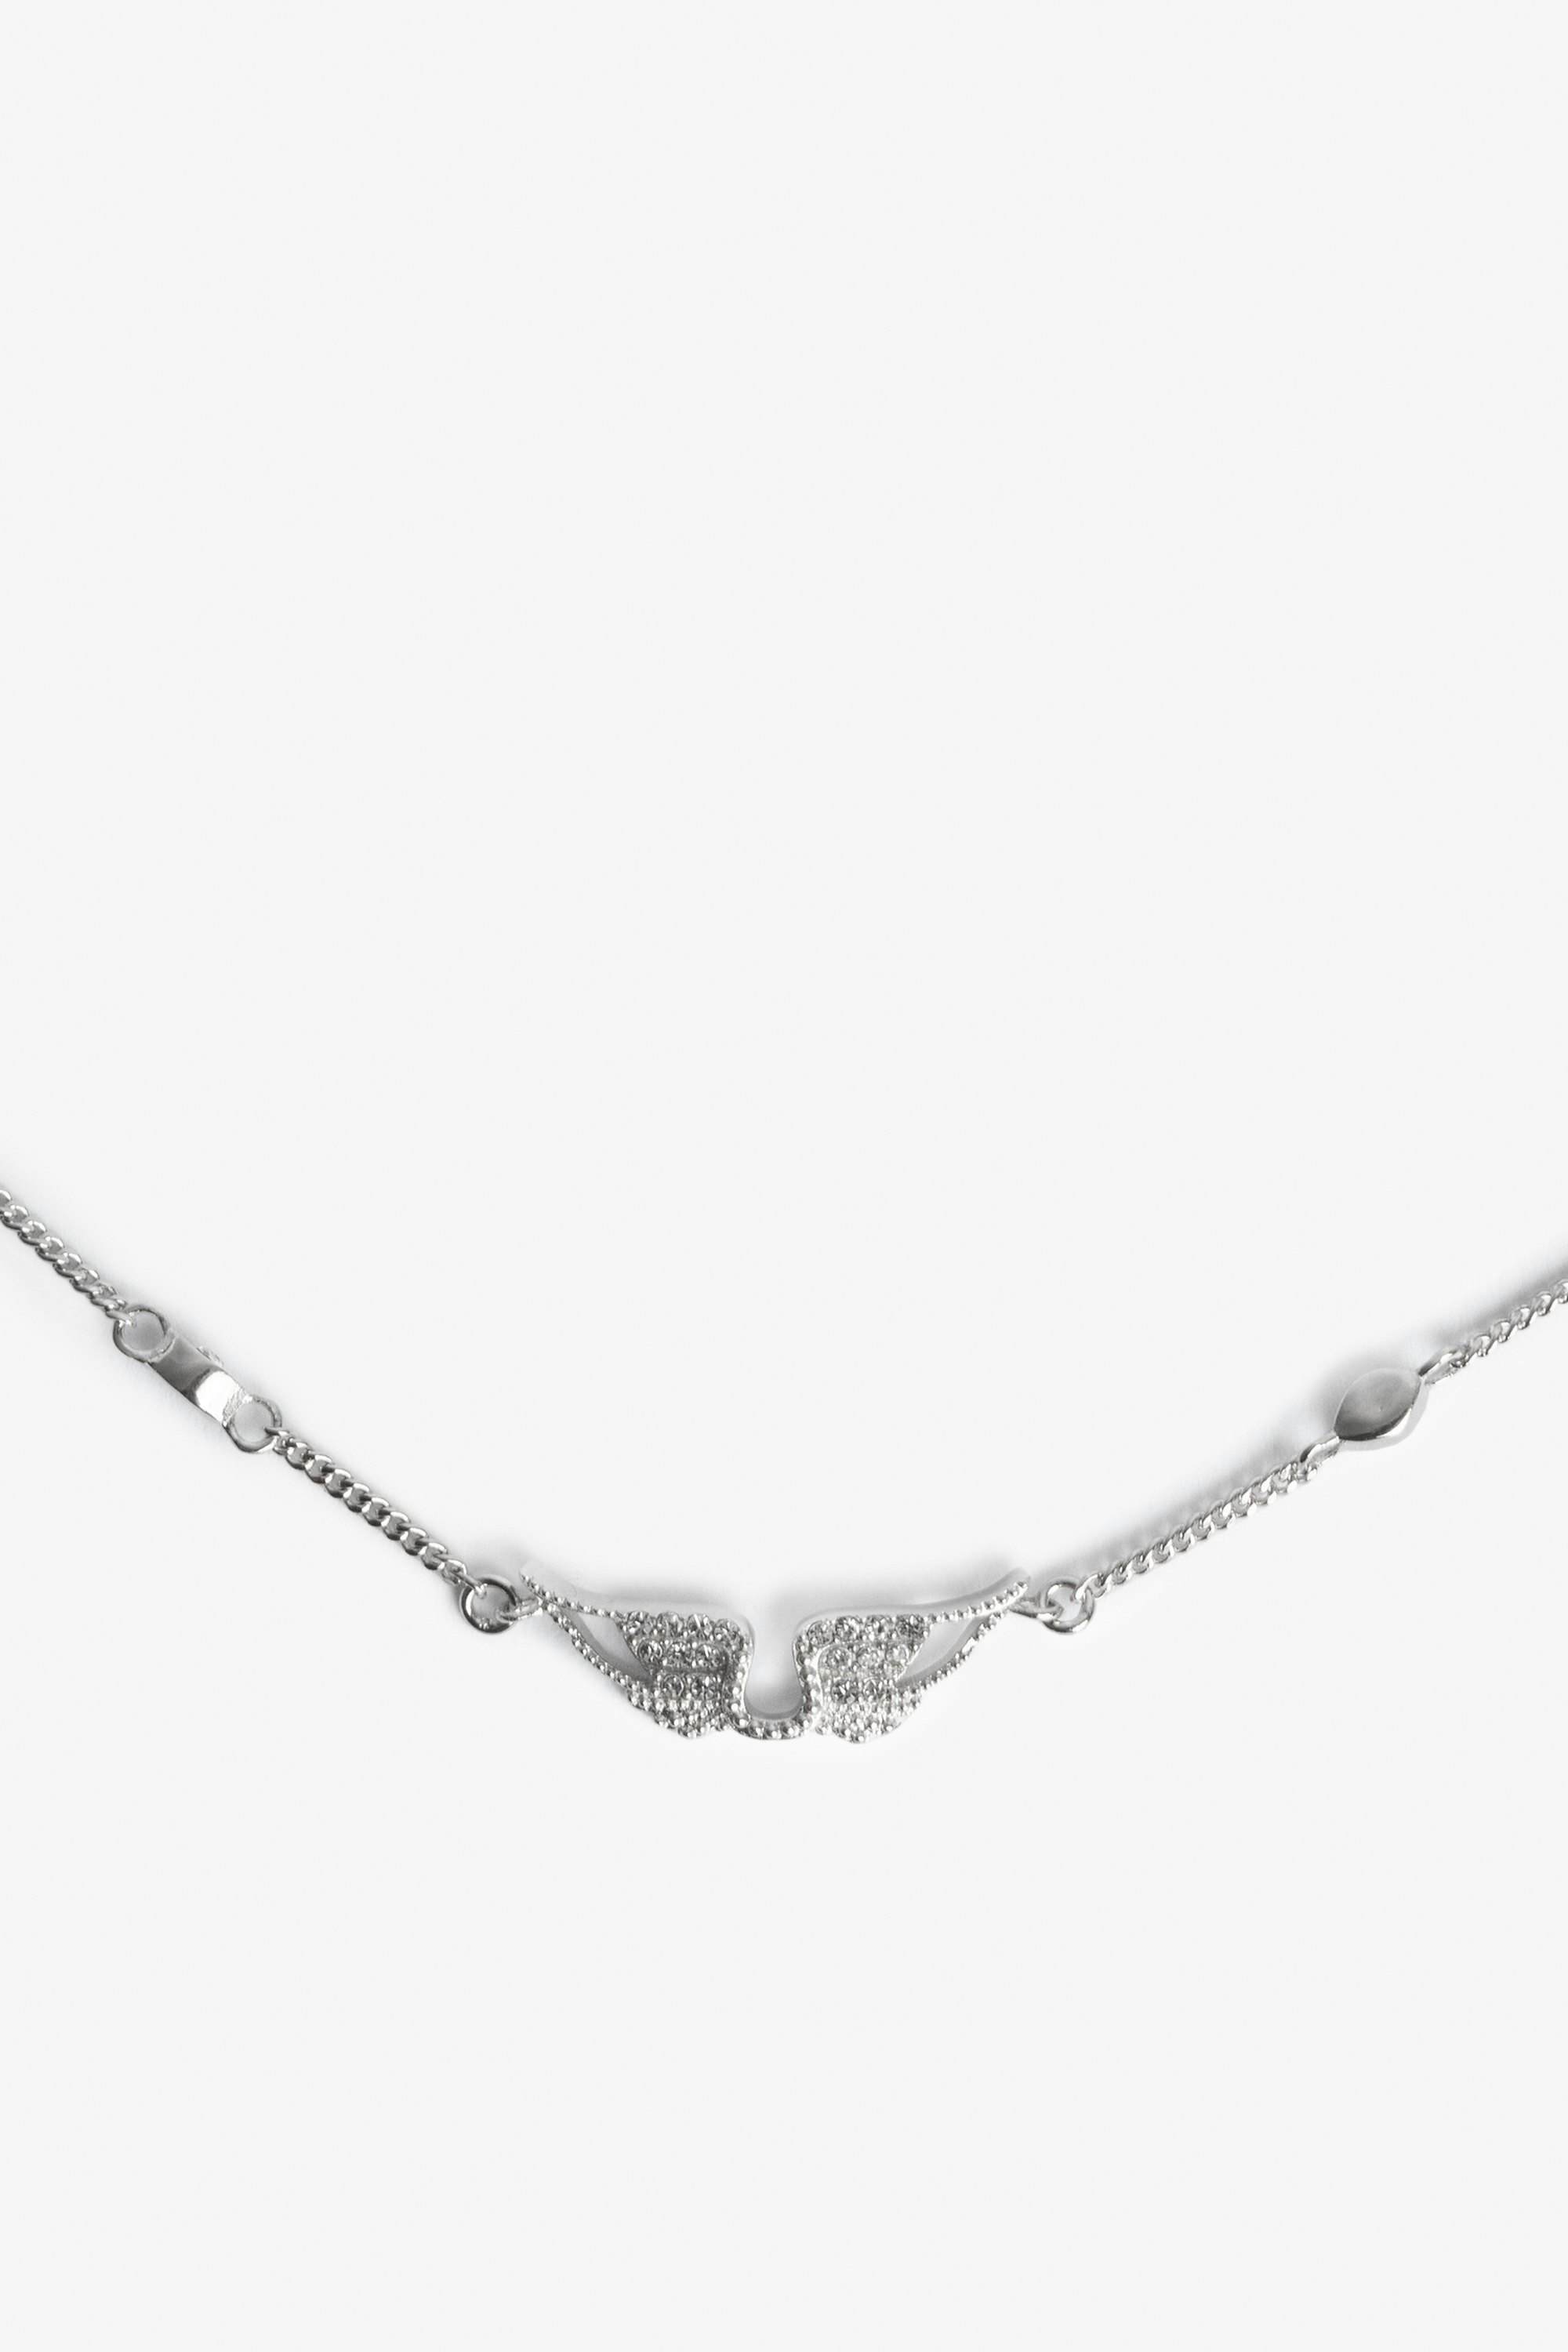 Rock Necklace - Brass and black rhinestone necklace.